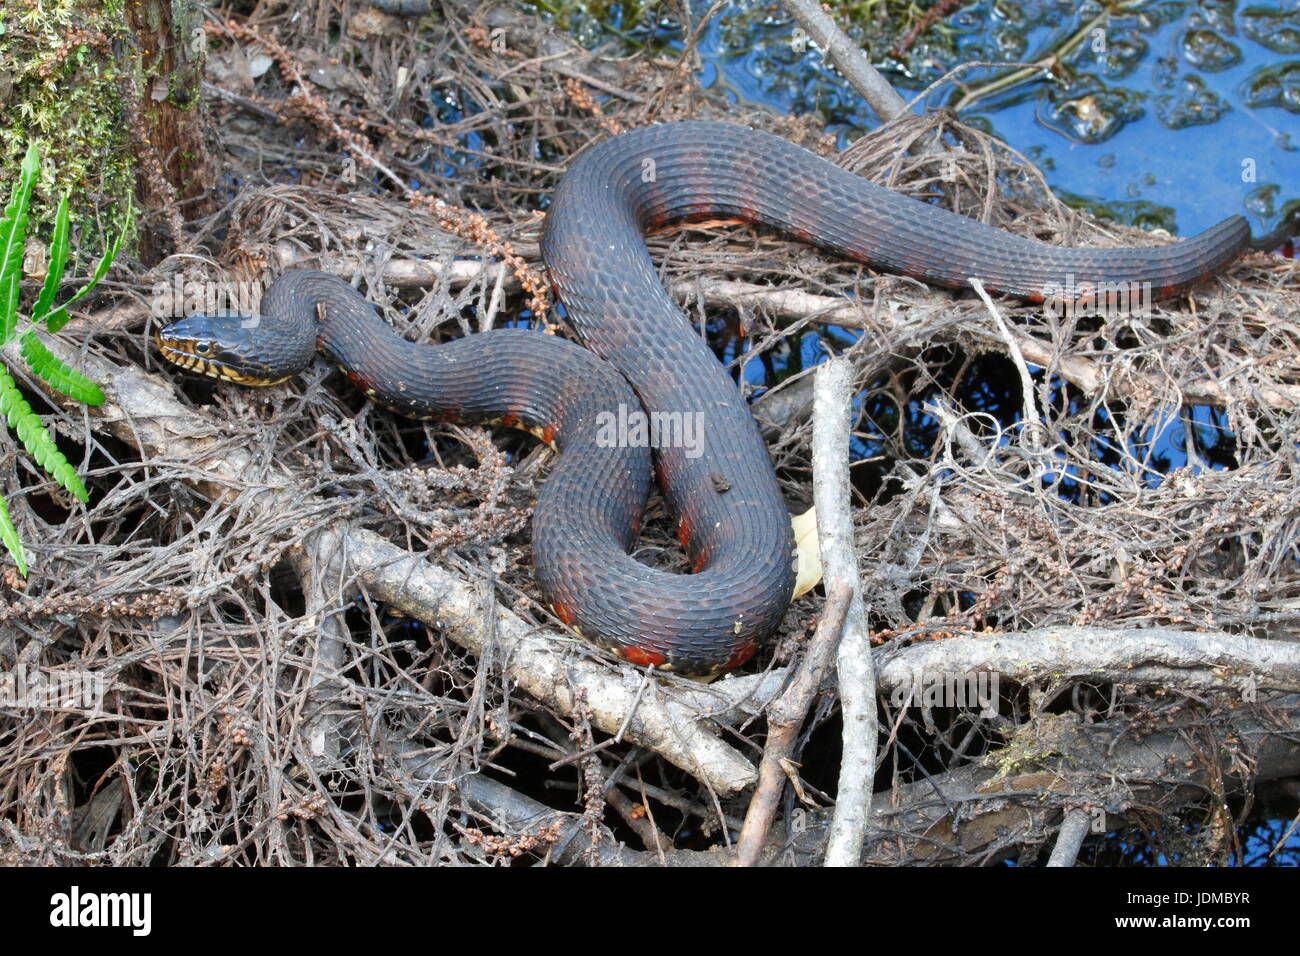 A Florida banded watersnake, Nerodia fasciata pictiventris, resting on forest debris. Stock Photo